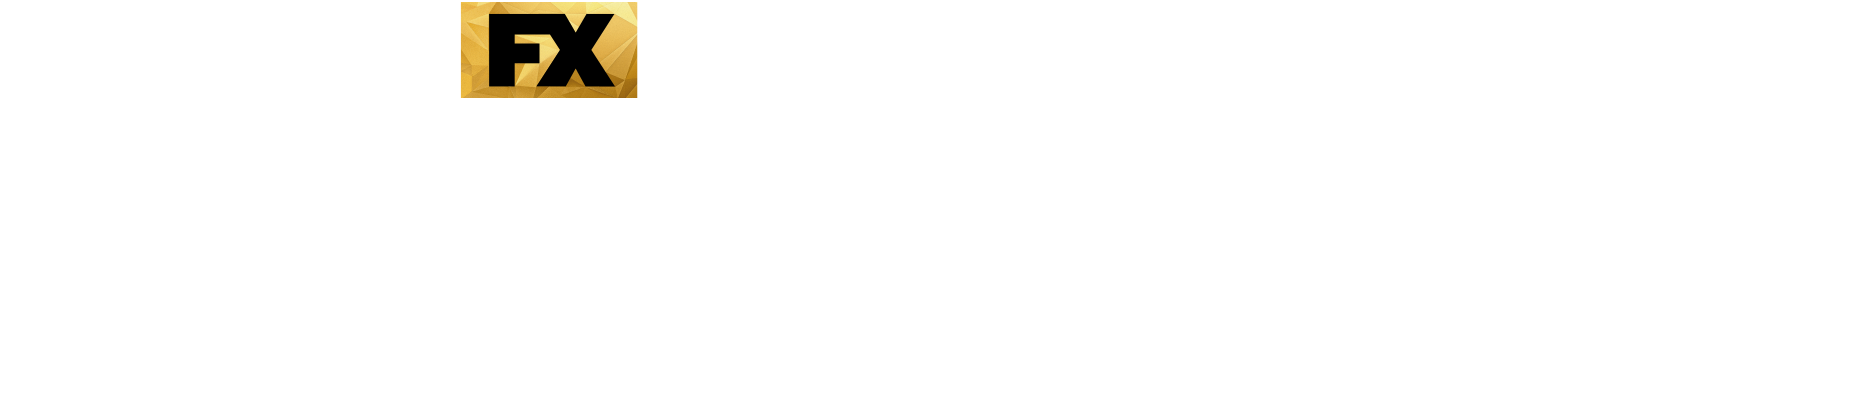 Snowfall Show Logo